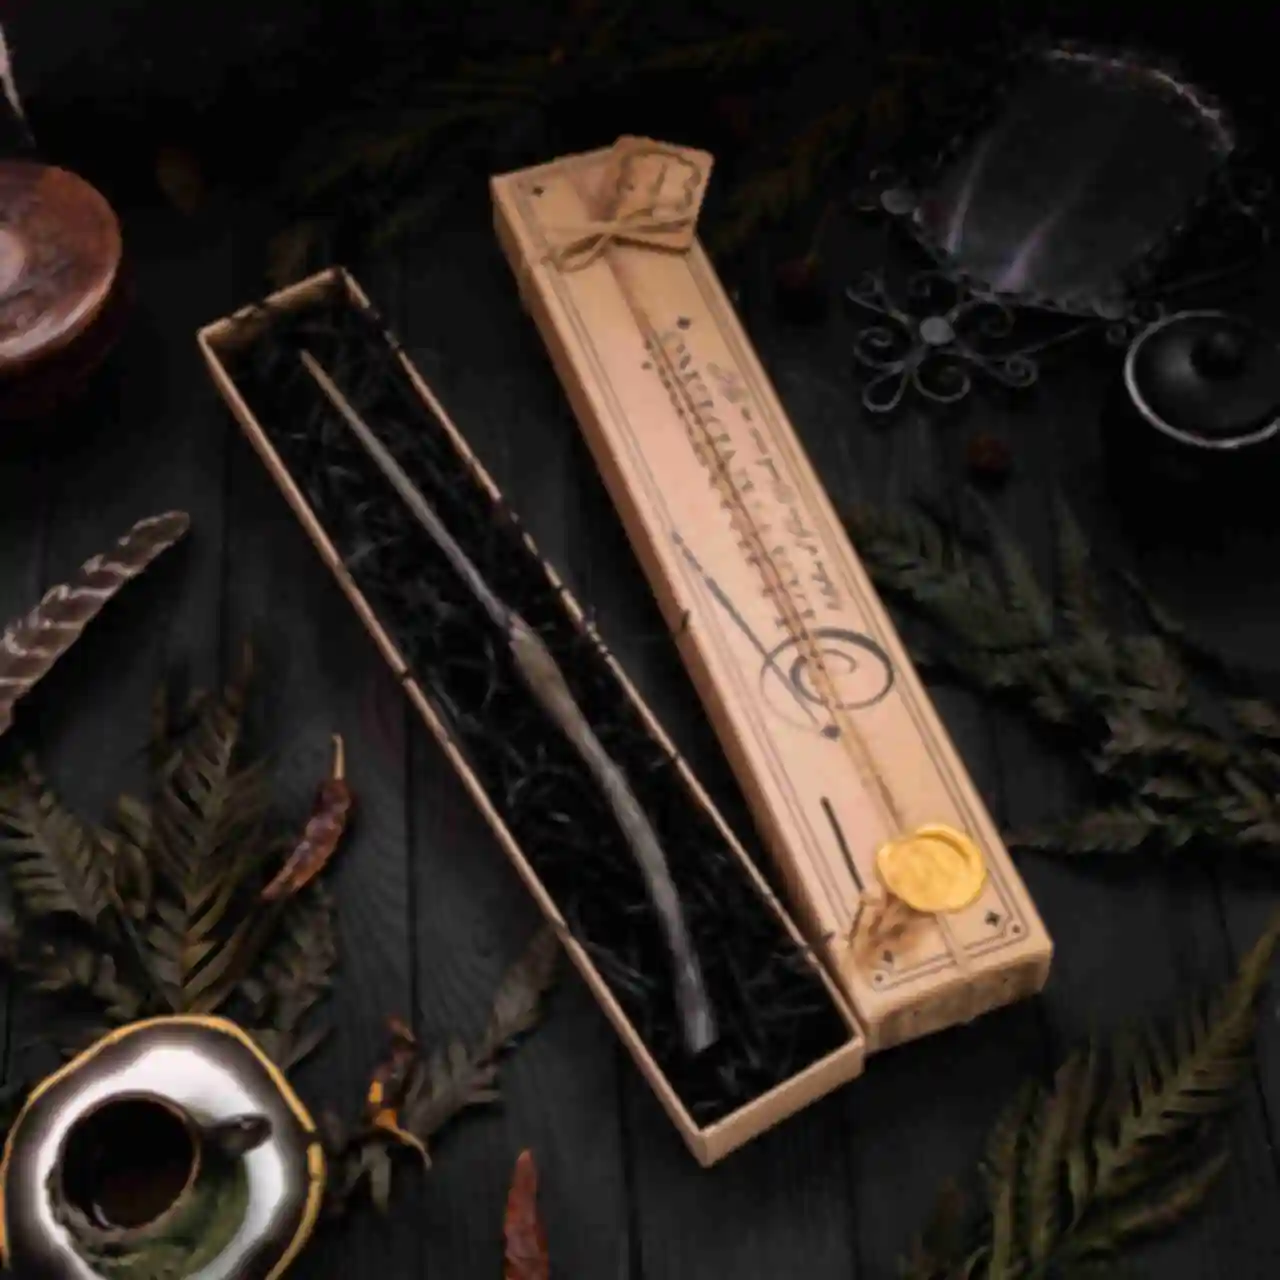 Волшебная палочка Беллатрисы Лестрейндж ⚡️ Bellatrix Lestrange's Wand ⚡️ Сувениры Гарри Поттер ⚡️ Harry Potter. Фото №2